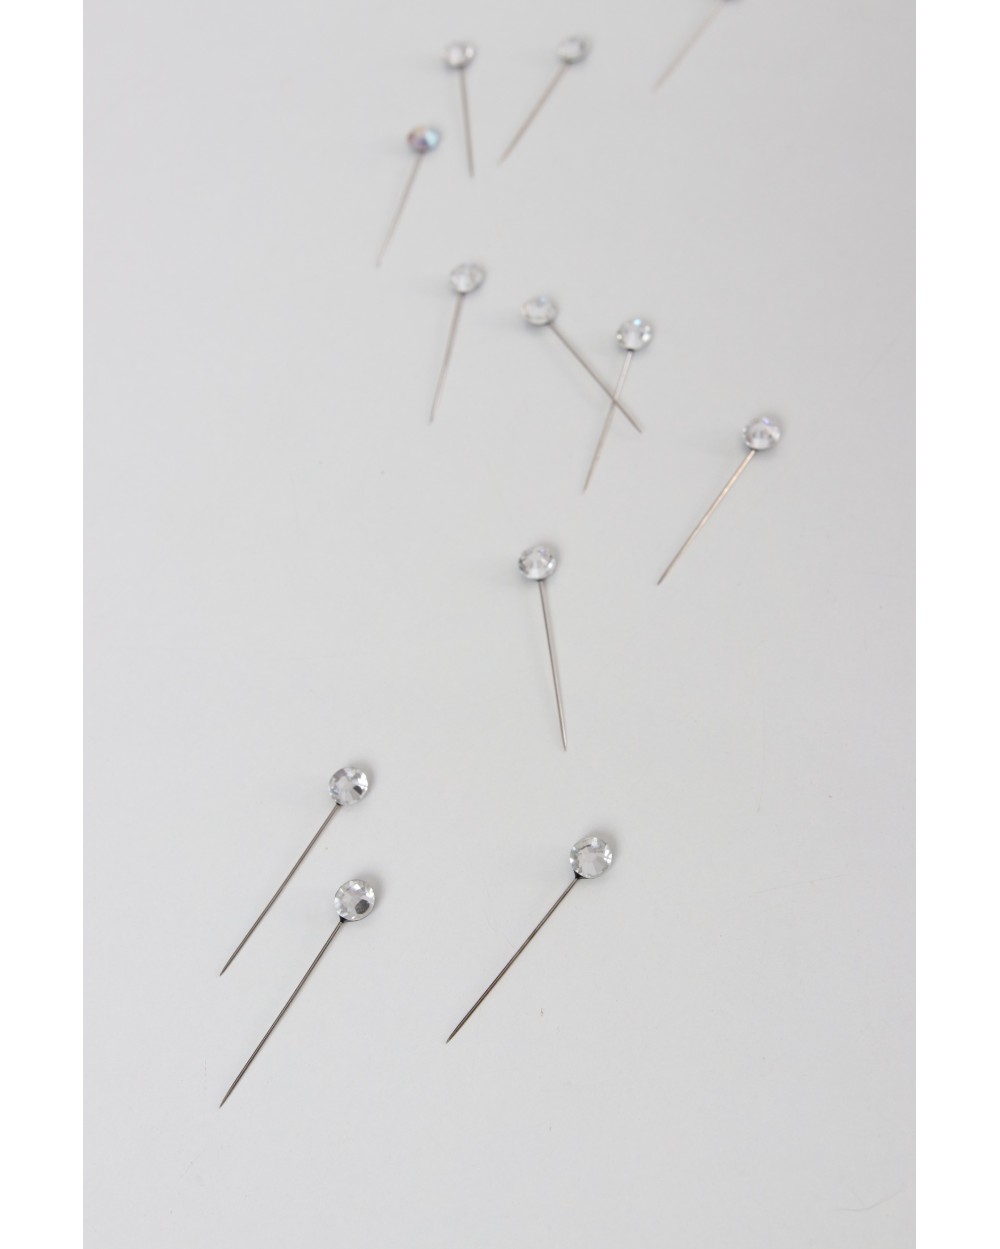 Set of 12 needles for hijab with rhinestones